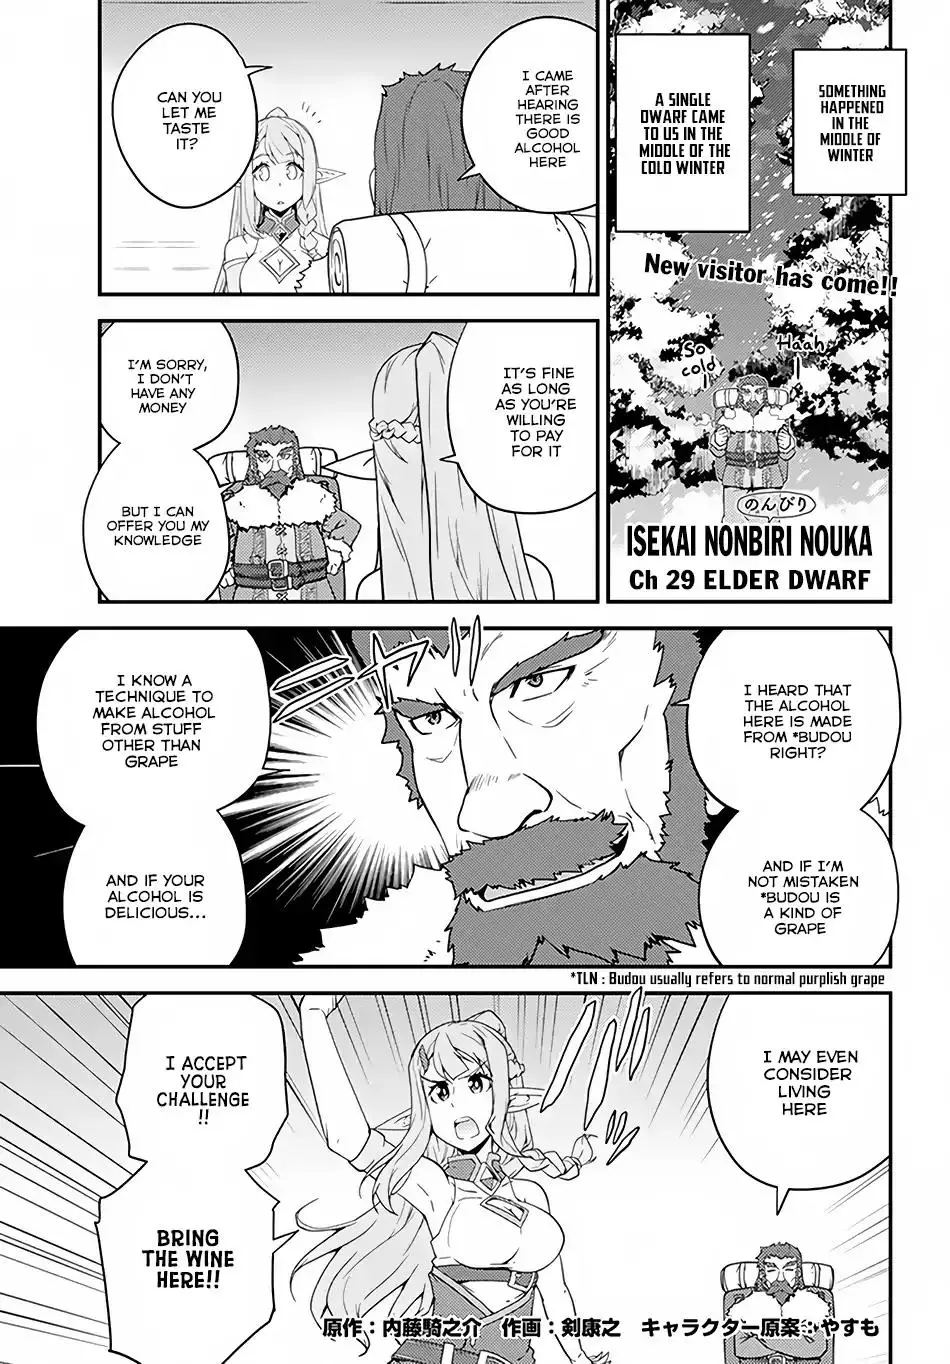 Isekai Nonbiri Nouka - 29 page 1